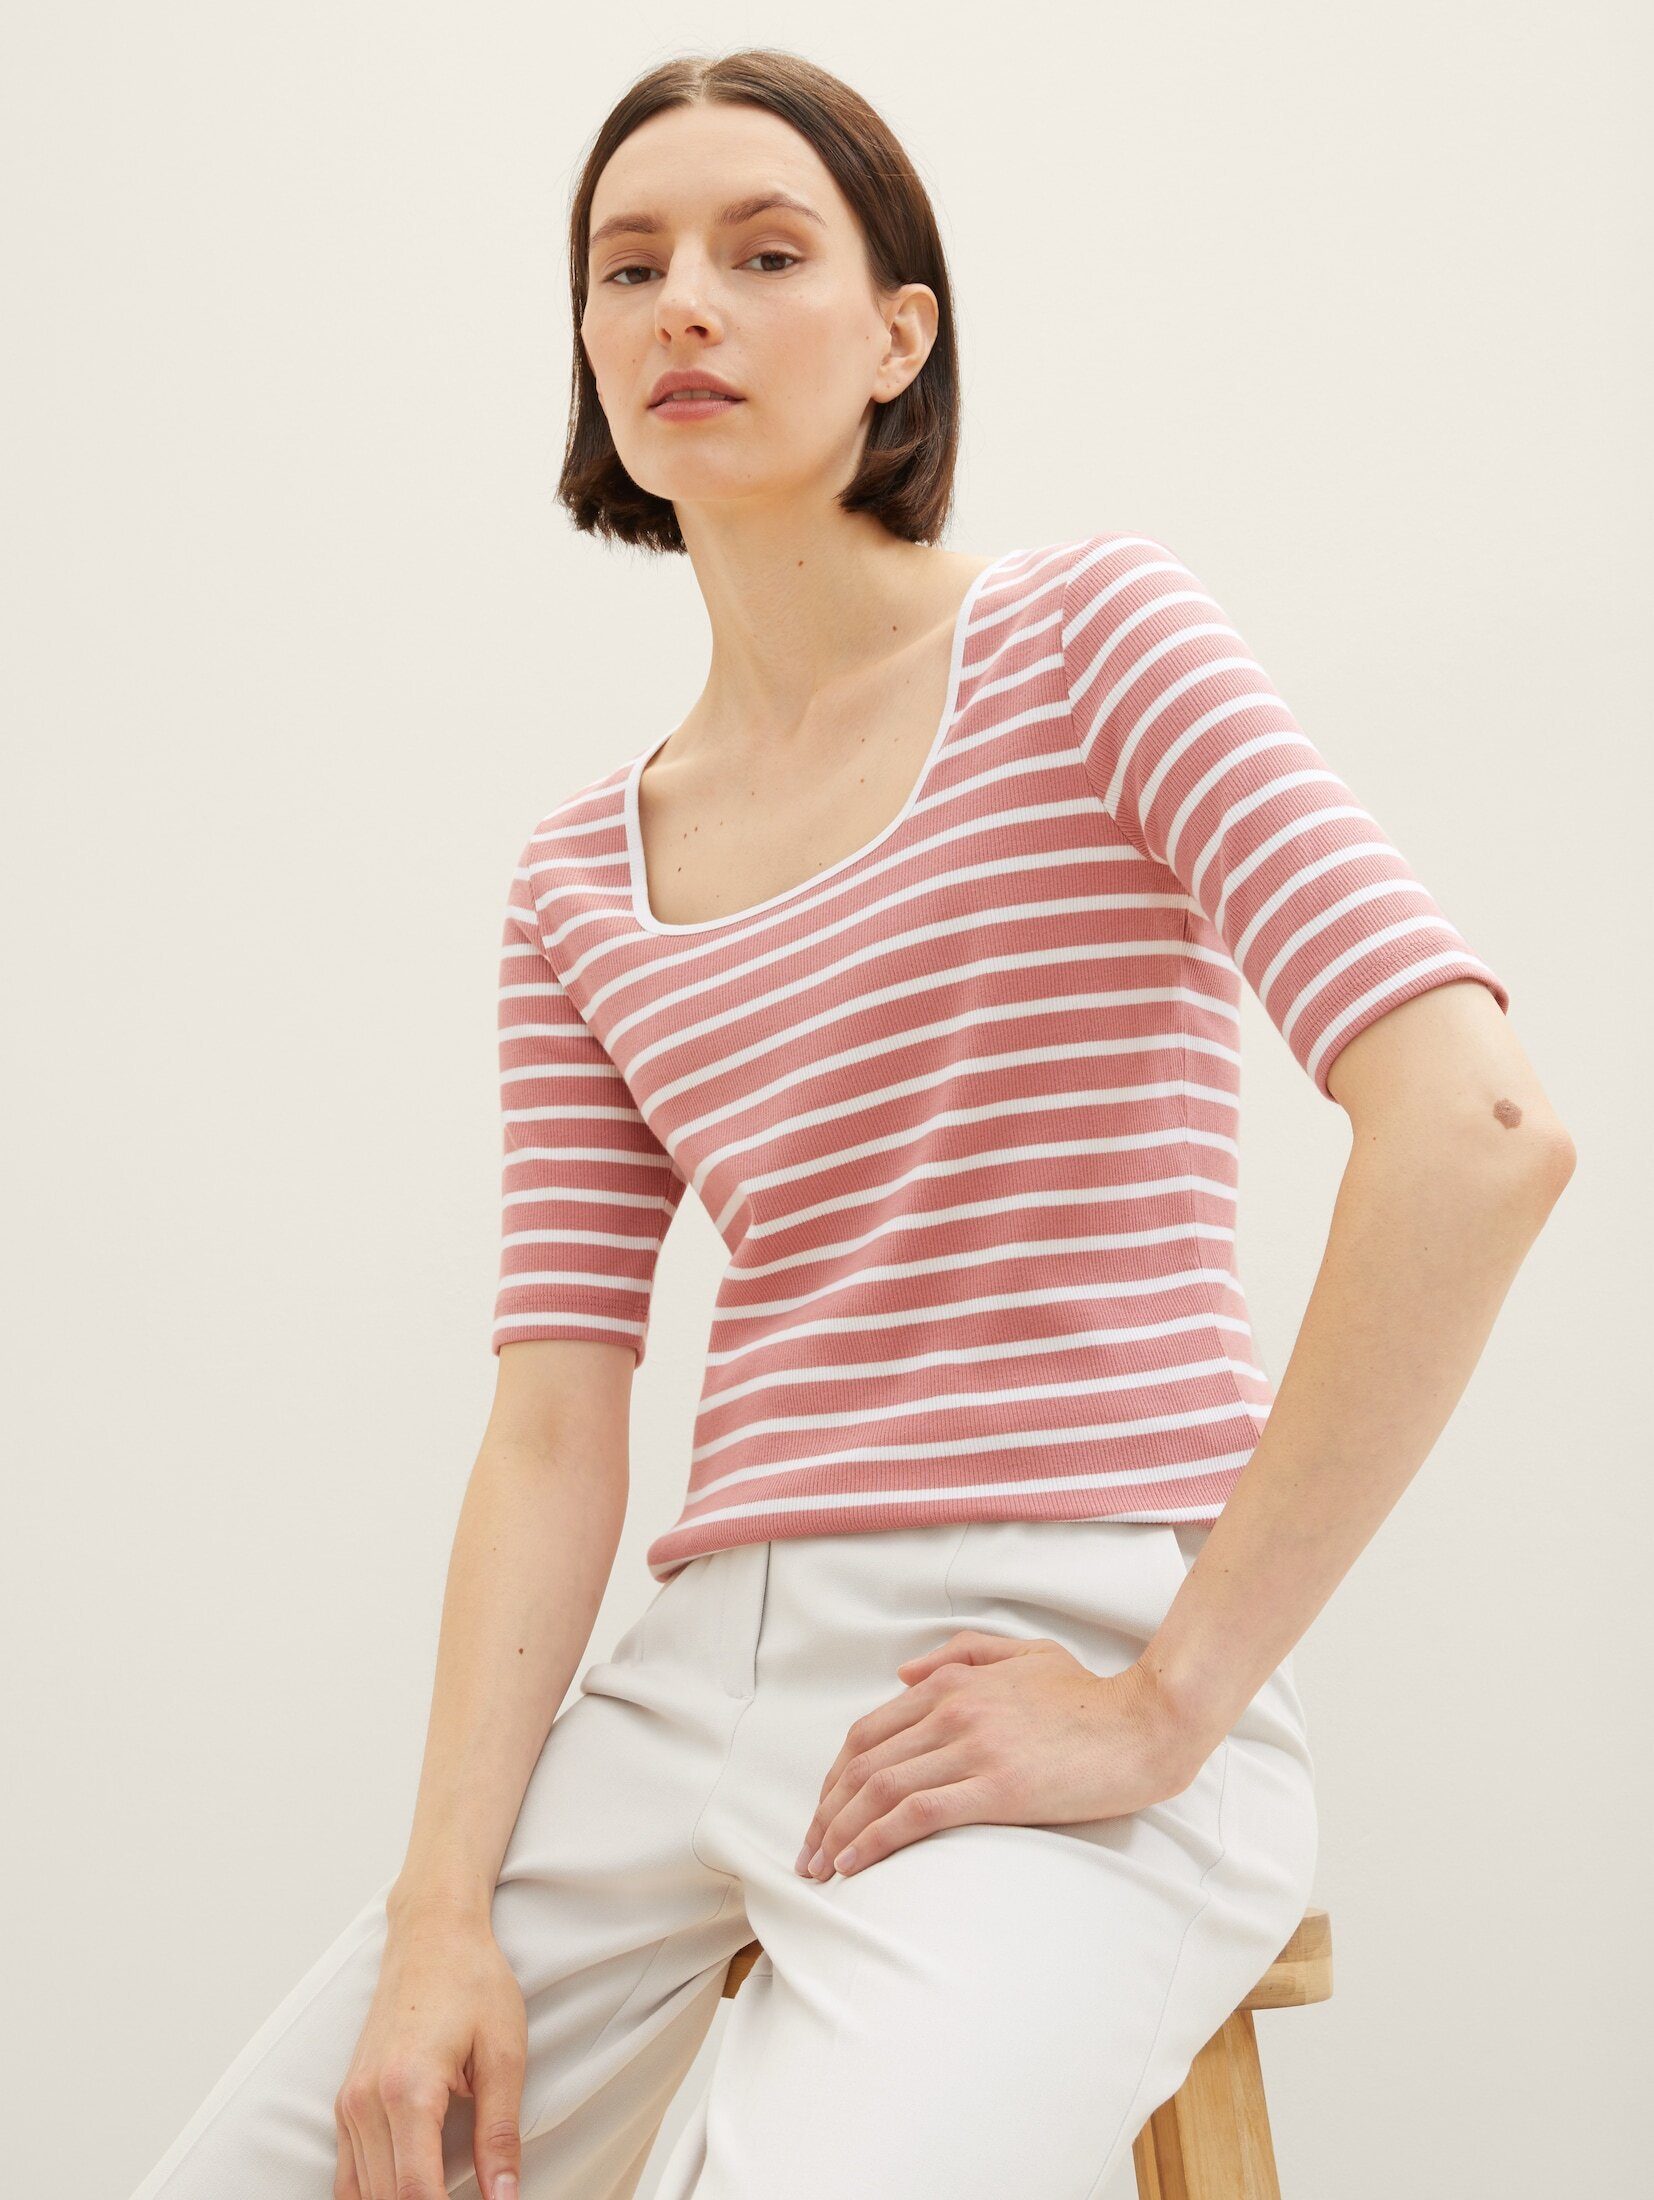 TOM TAILOR stripe T-Shirt rose Shirt offwhite Gestreiftes